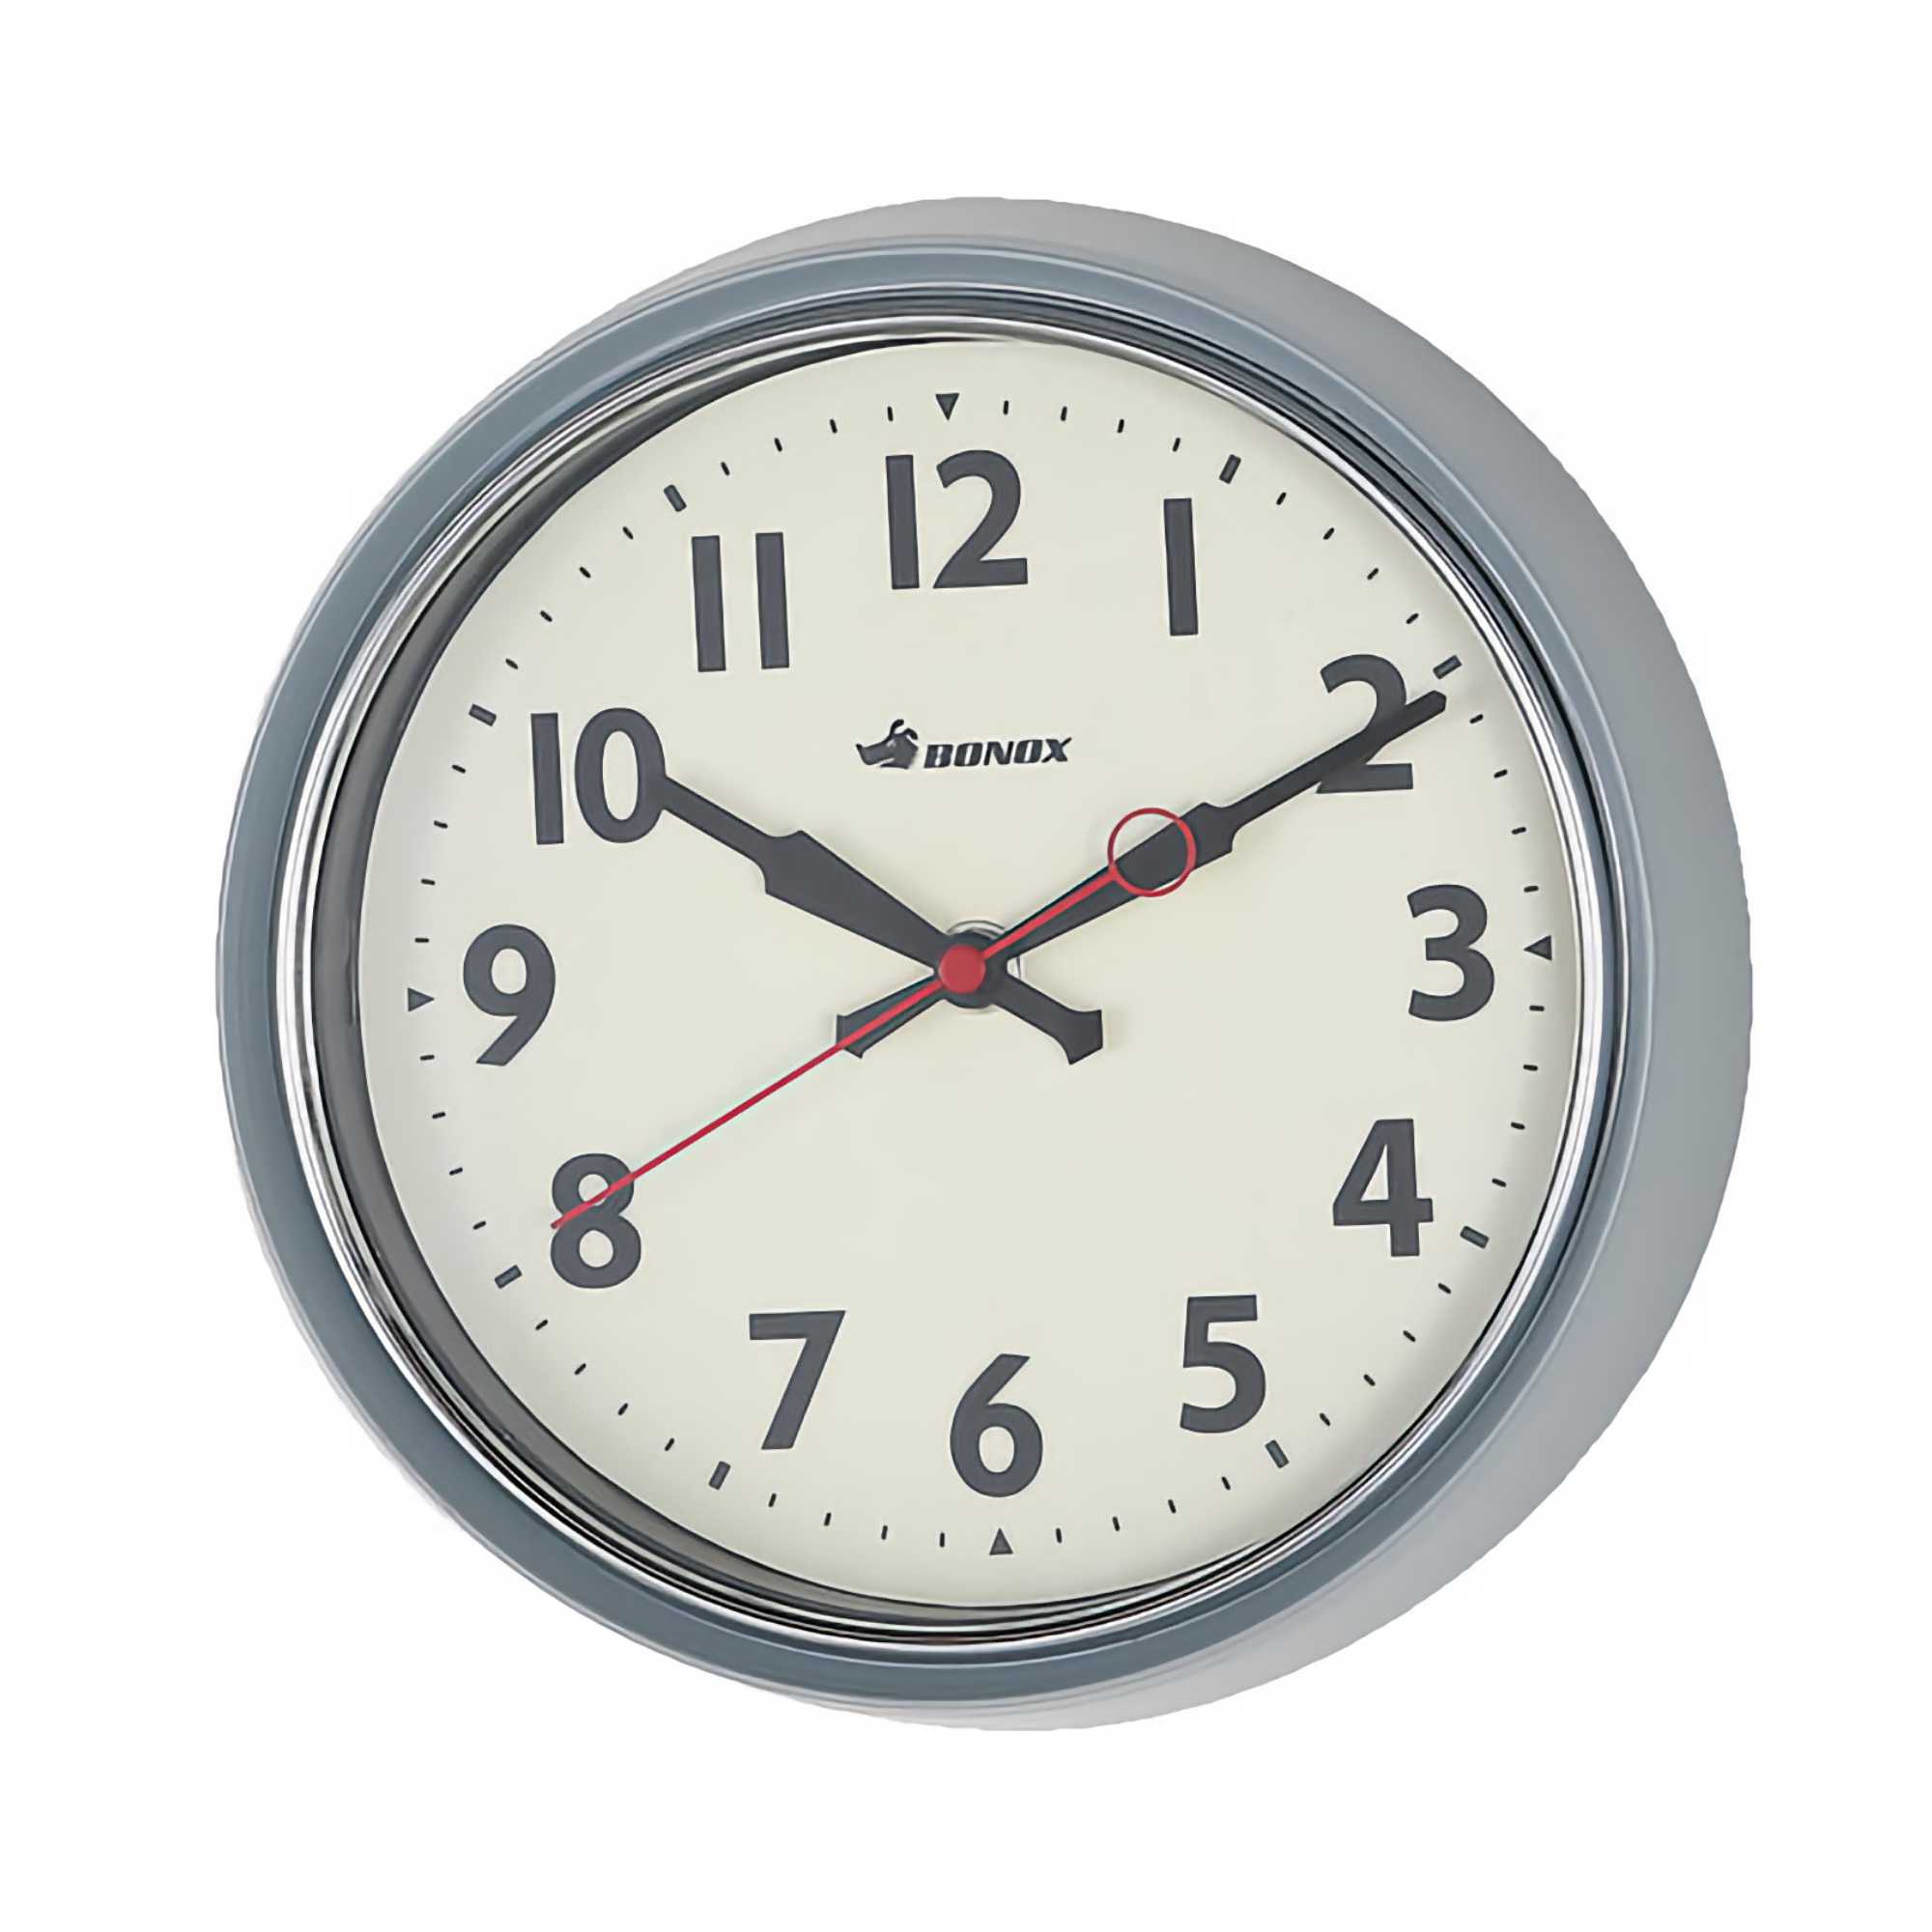 Dulton Bonox Wall Clock, classic grey